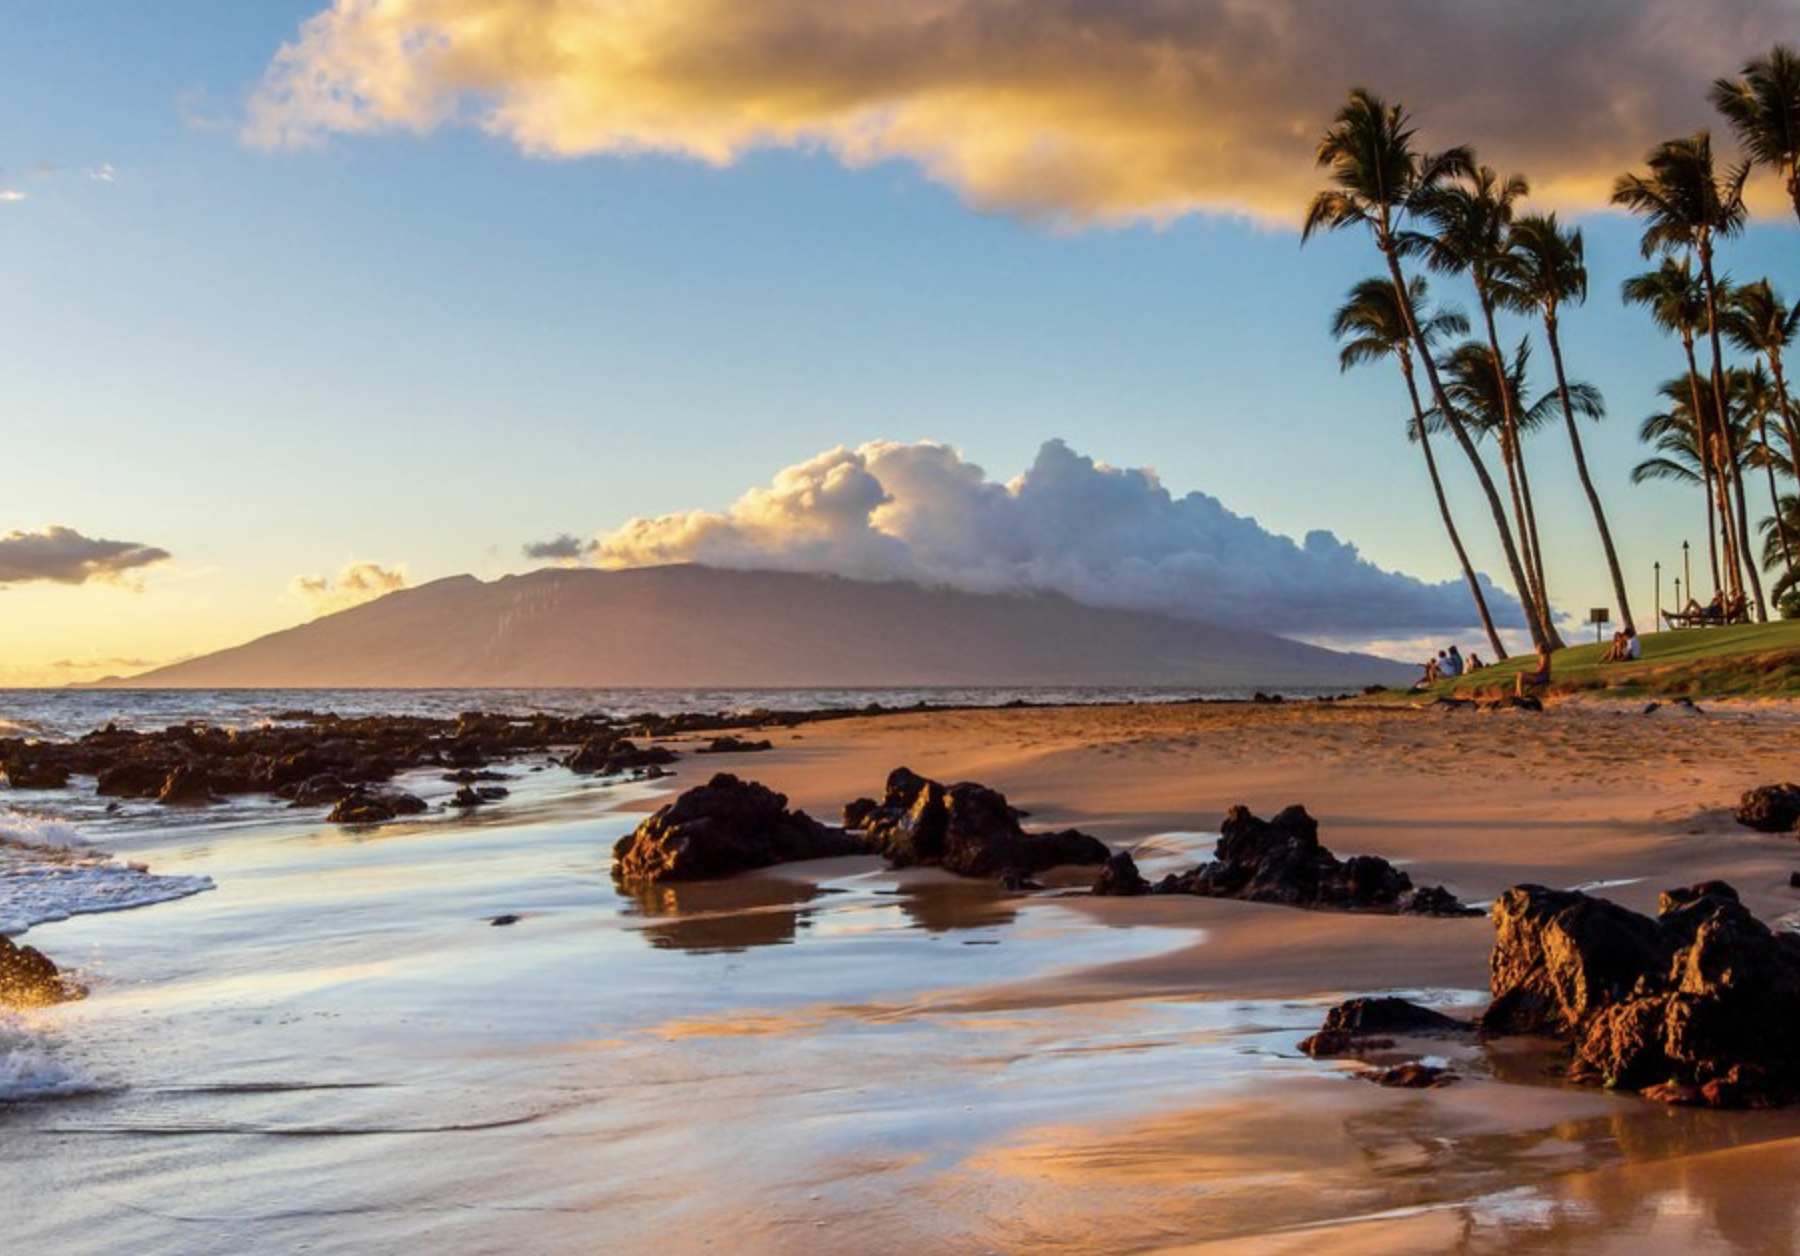 Maui Welcomes Travelers Despite Lahaina's Setback